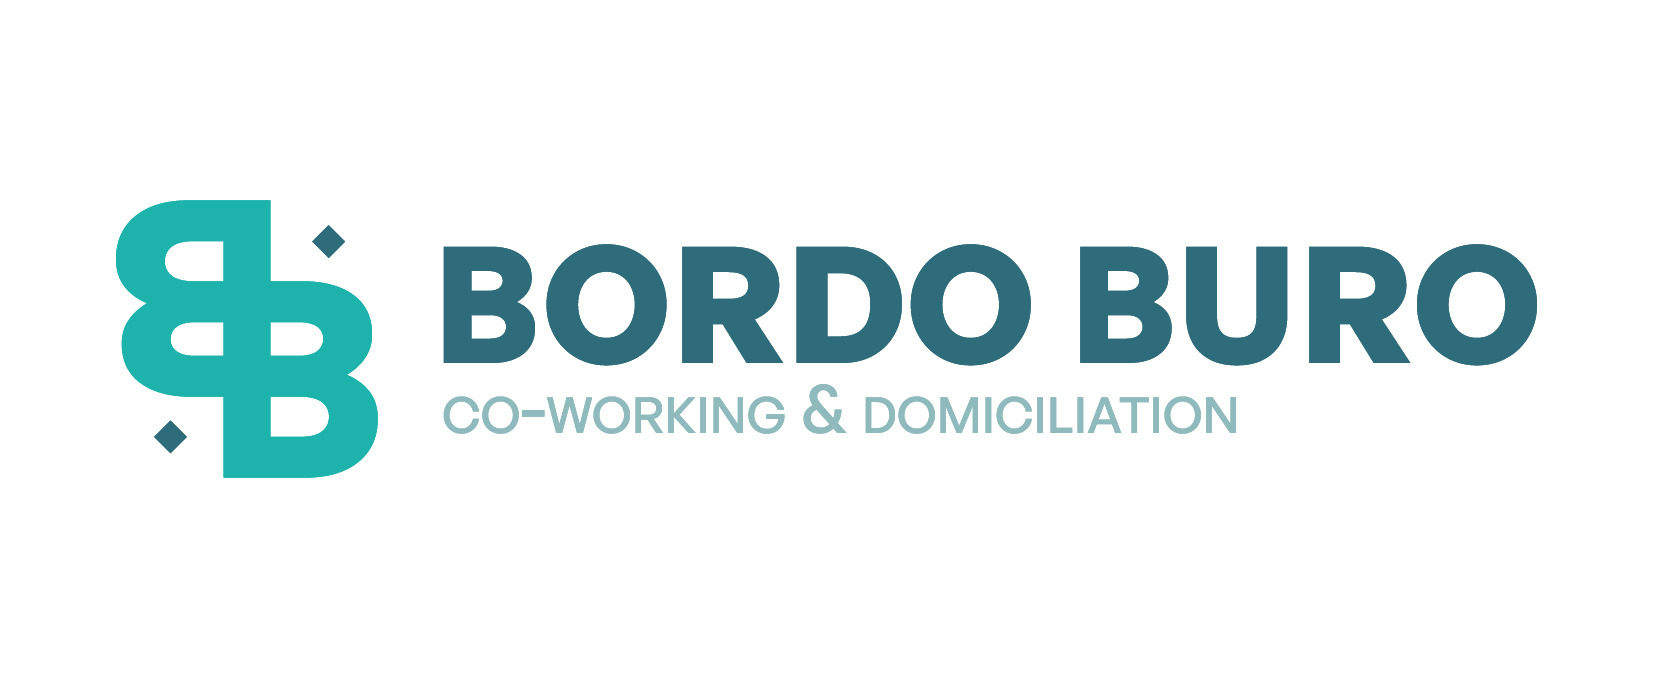 (c) Bordo-buro.fr